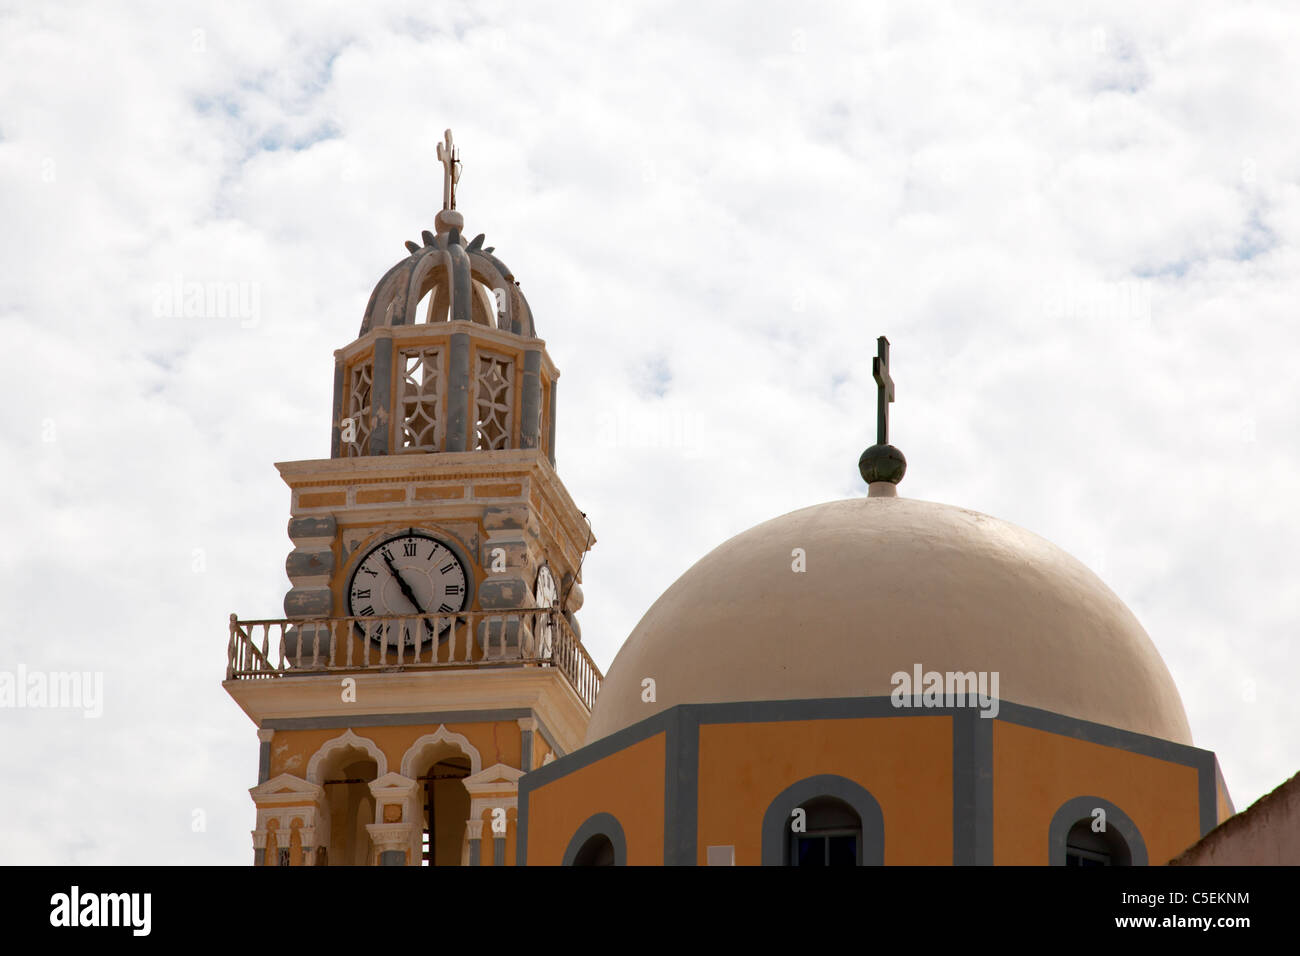 Thira, Santorini, Greek Island, Greece, Europe iconic domed church and clock tower with cross on top Stock Photo